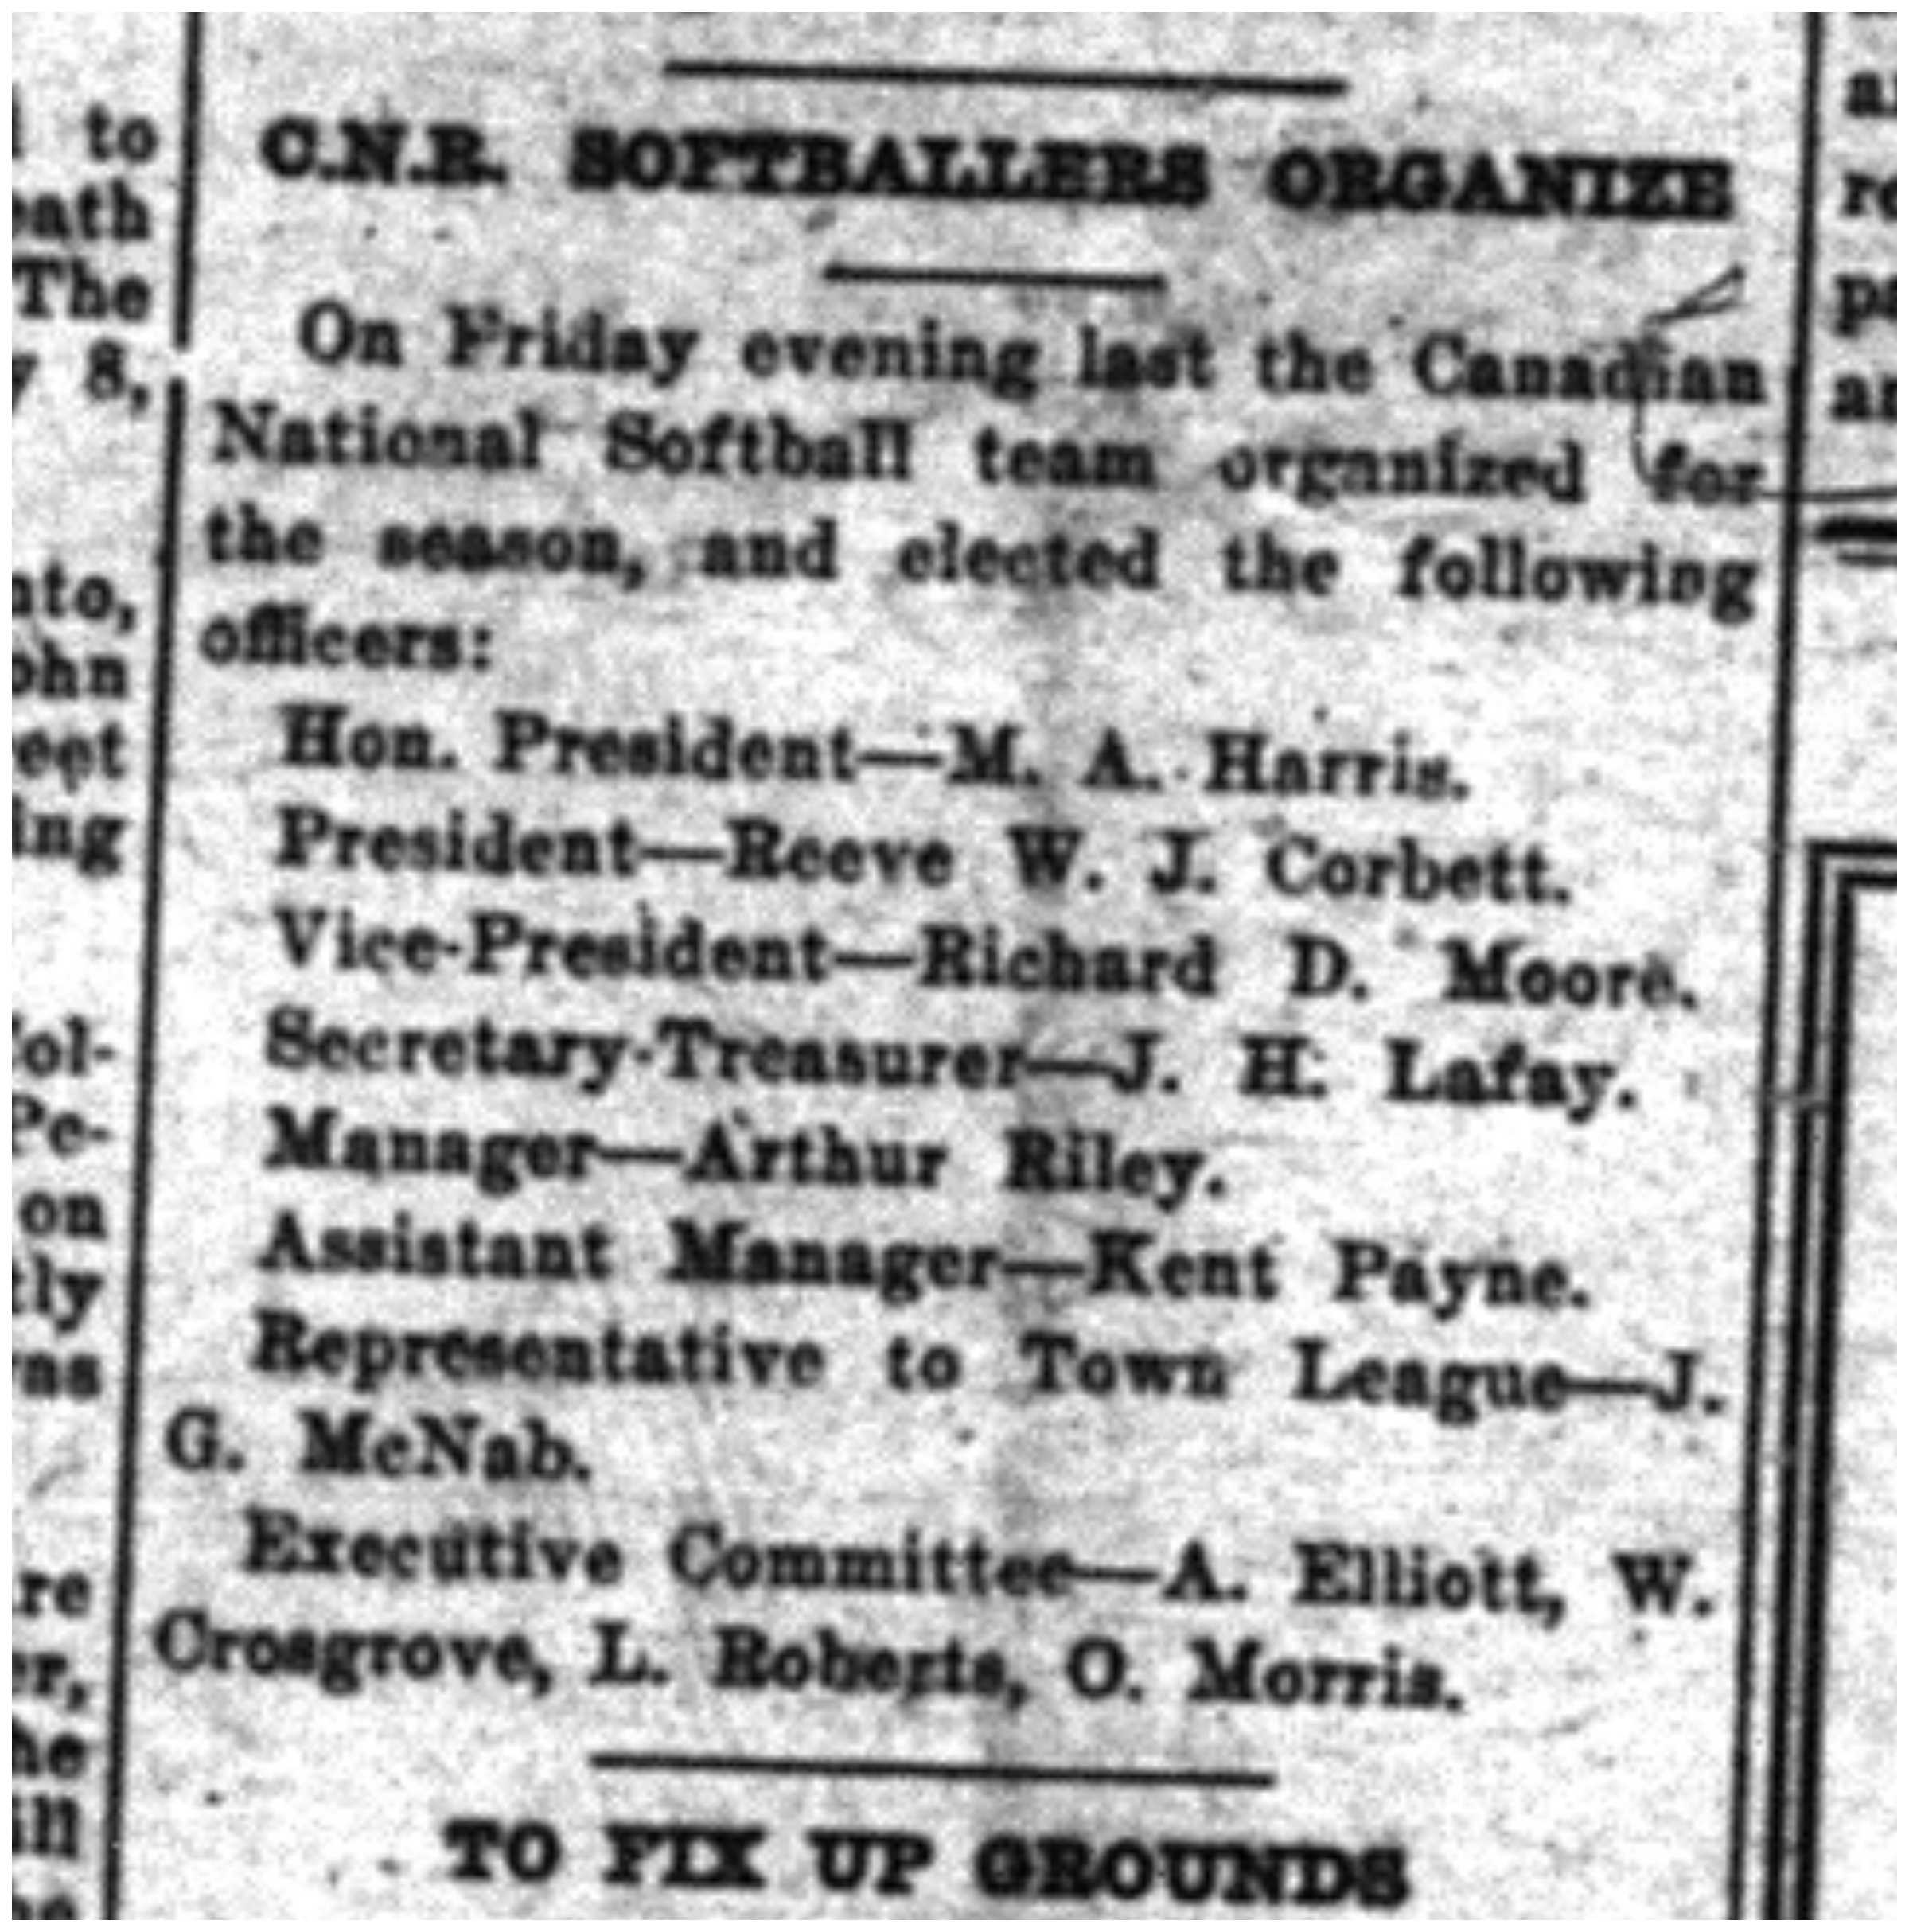 1925-05-07 Softball -Canadian National Softball Team